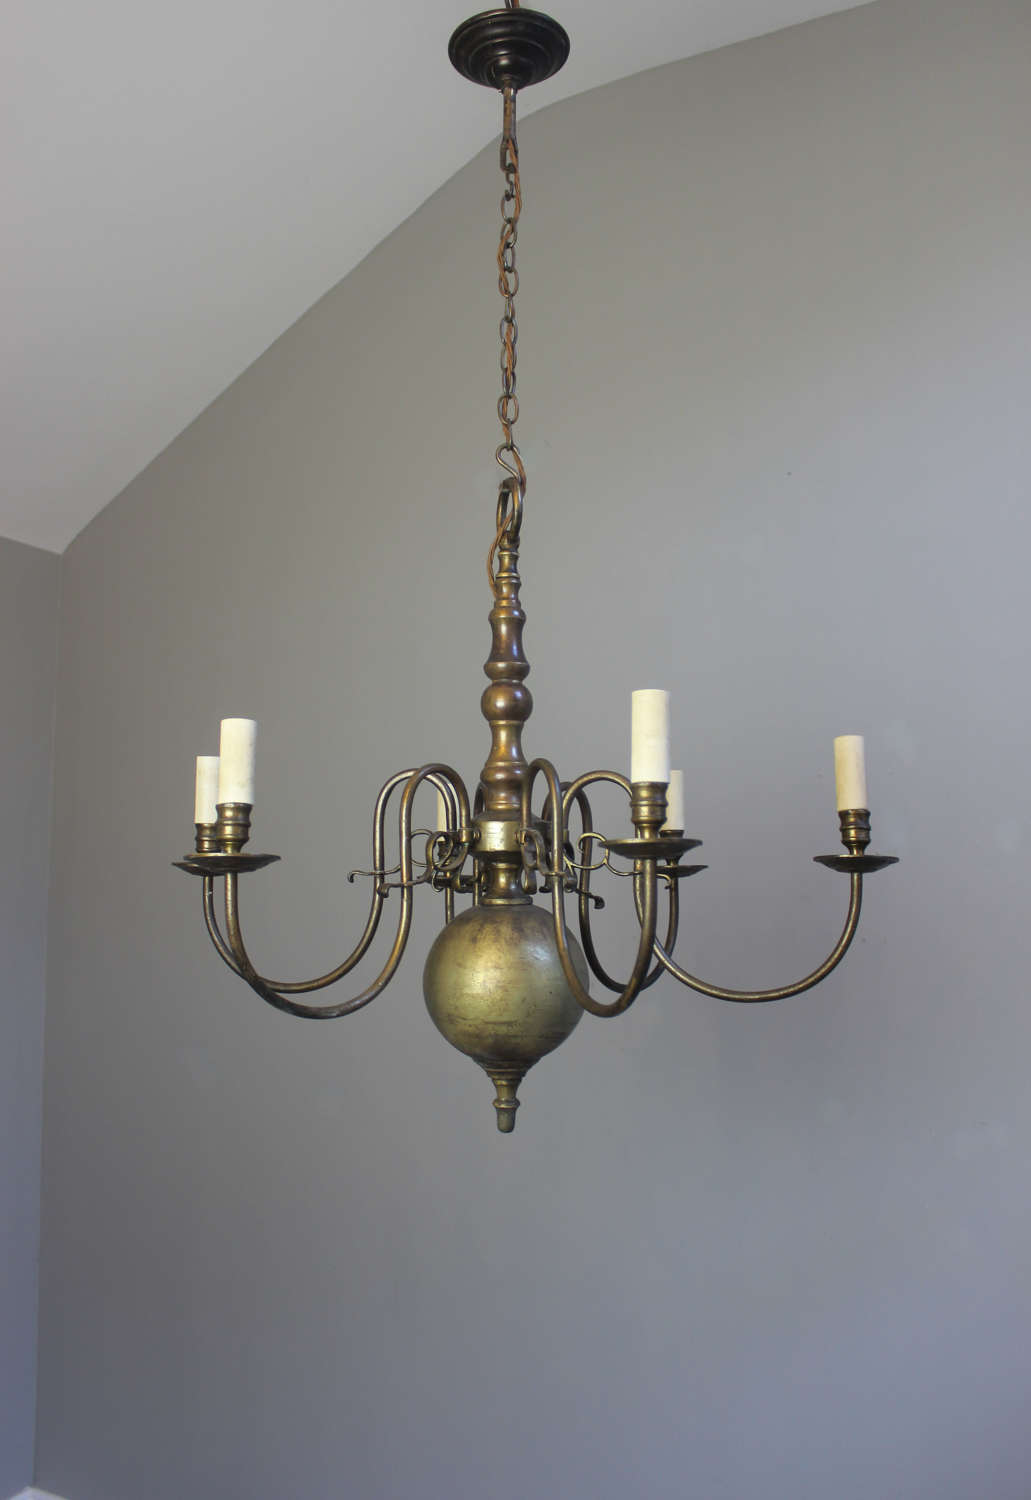 Simple elegant brass Dutch  style chandelier for low ceilings